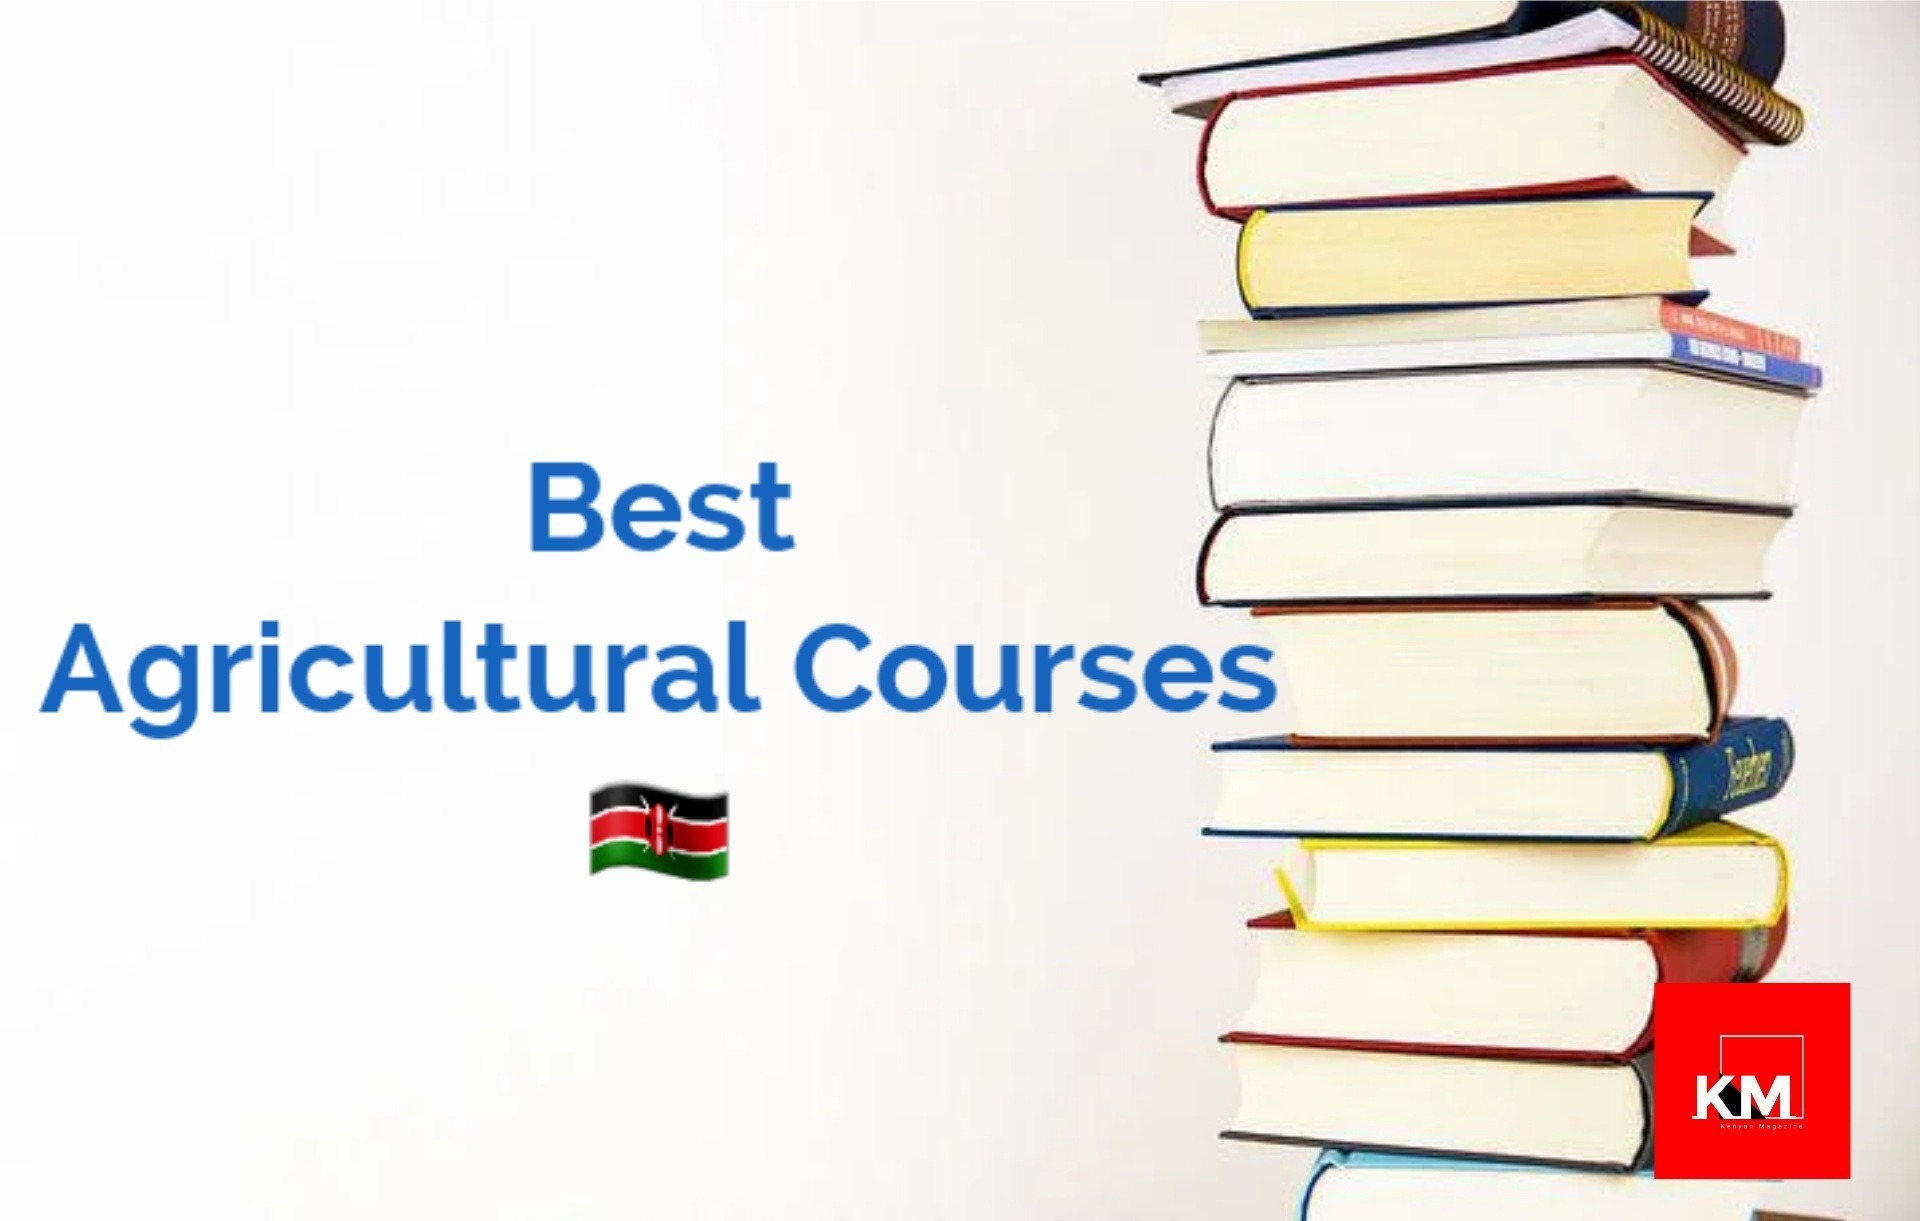 Best Agricultural Courses in Kenya